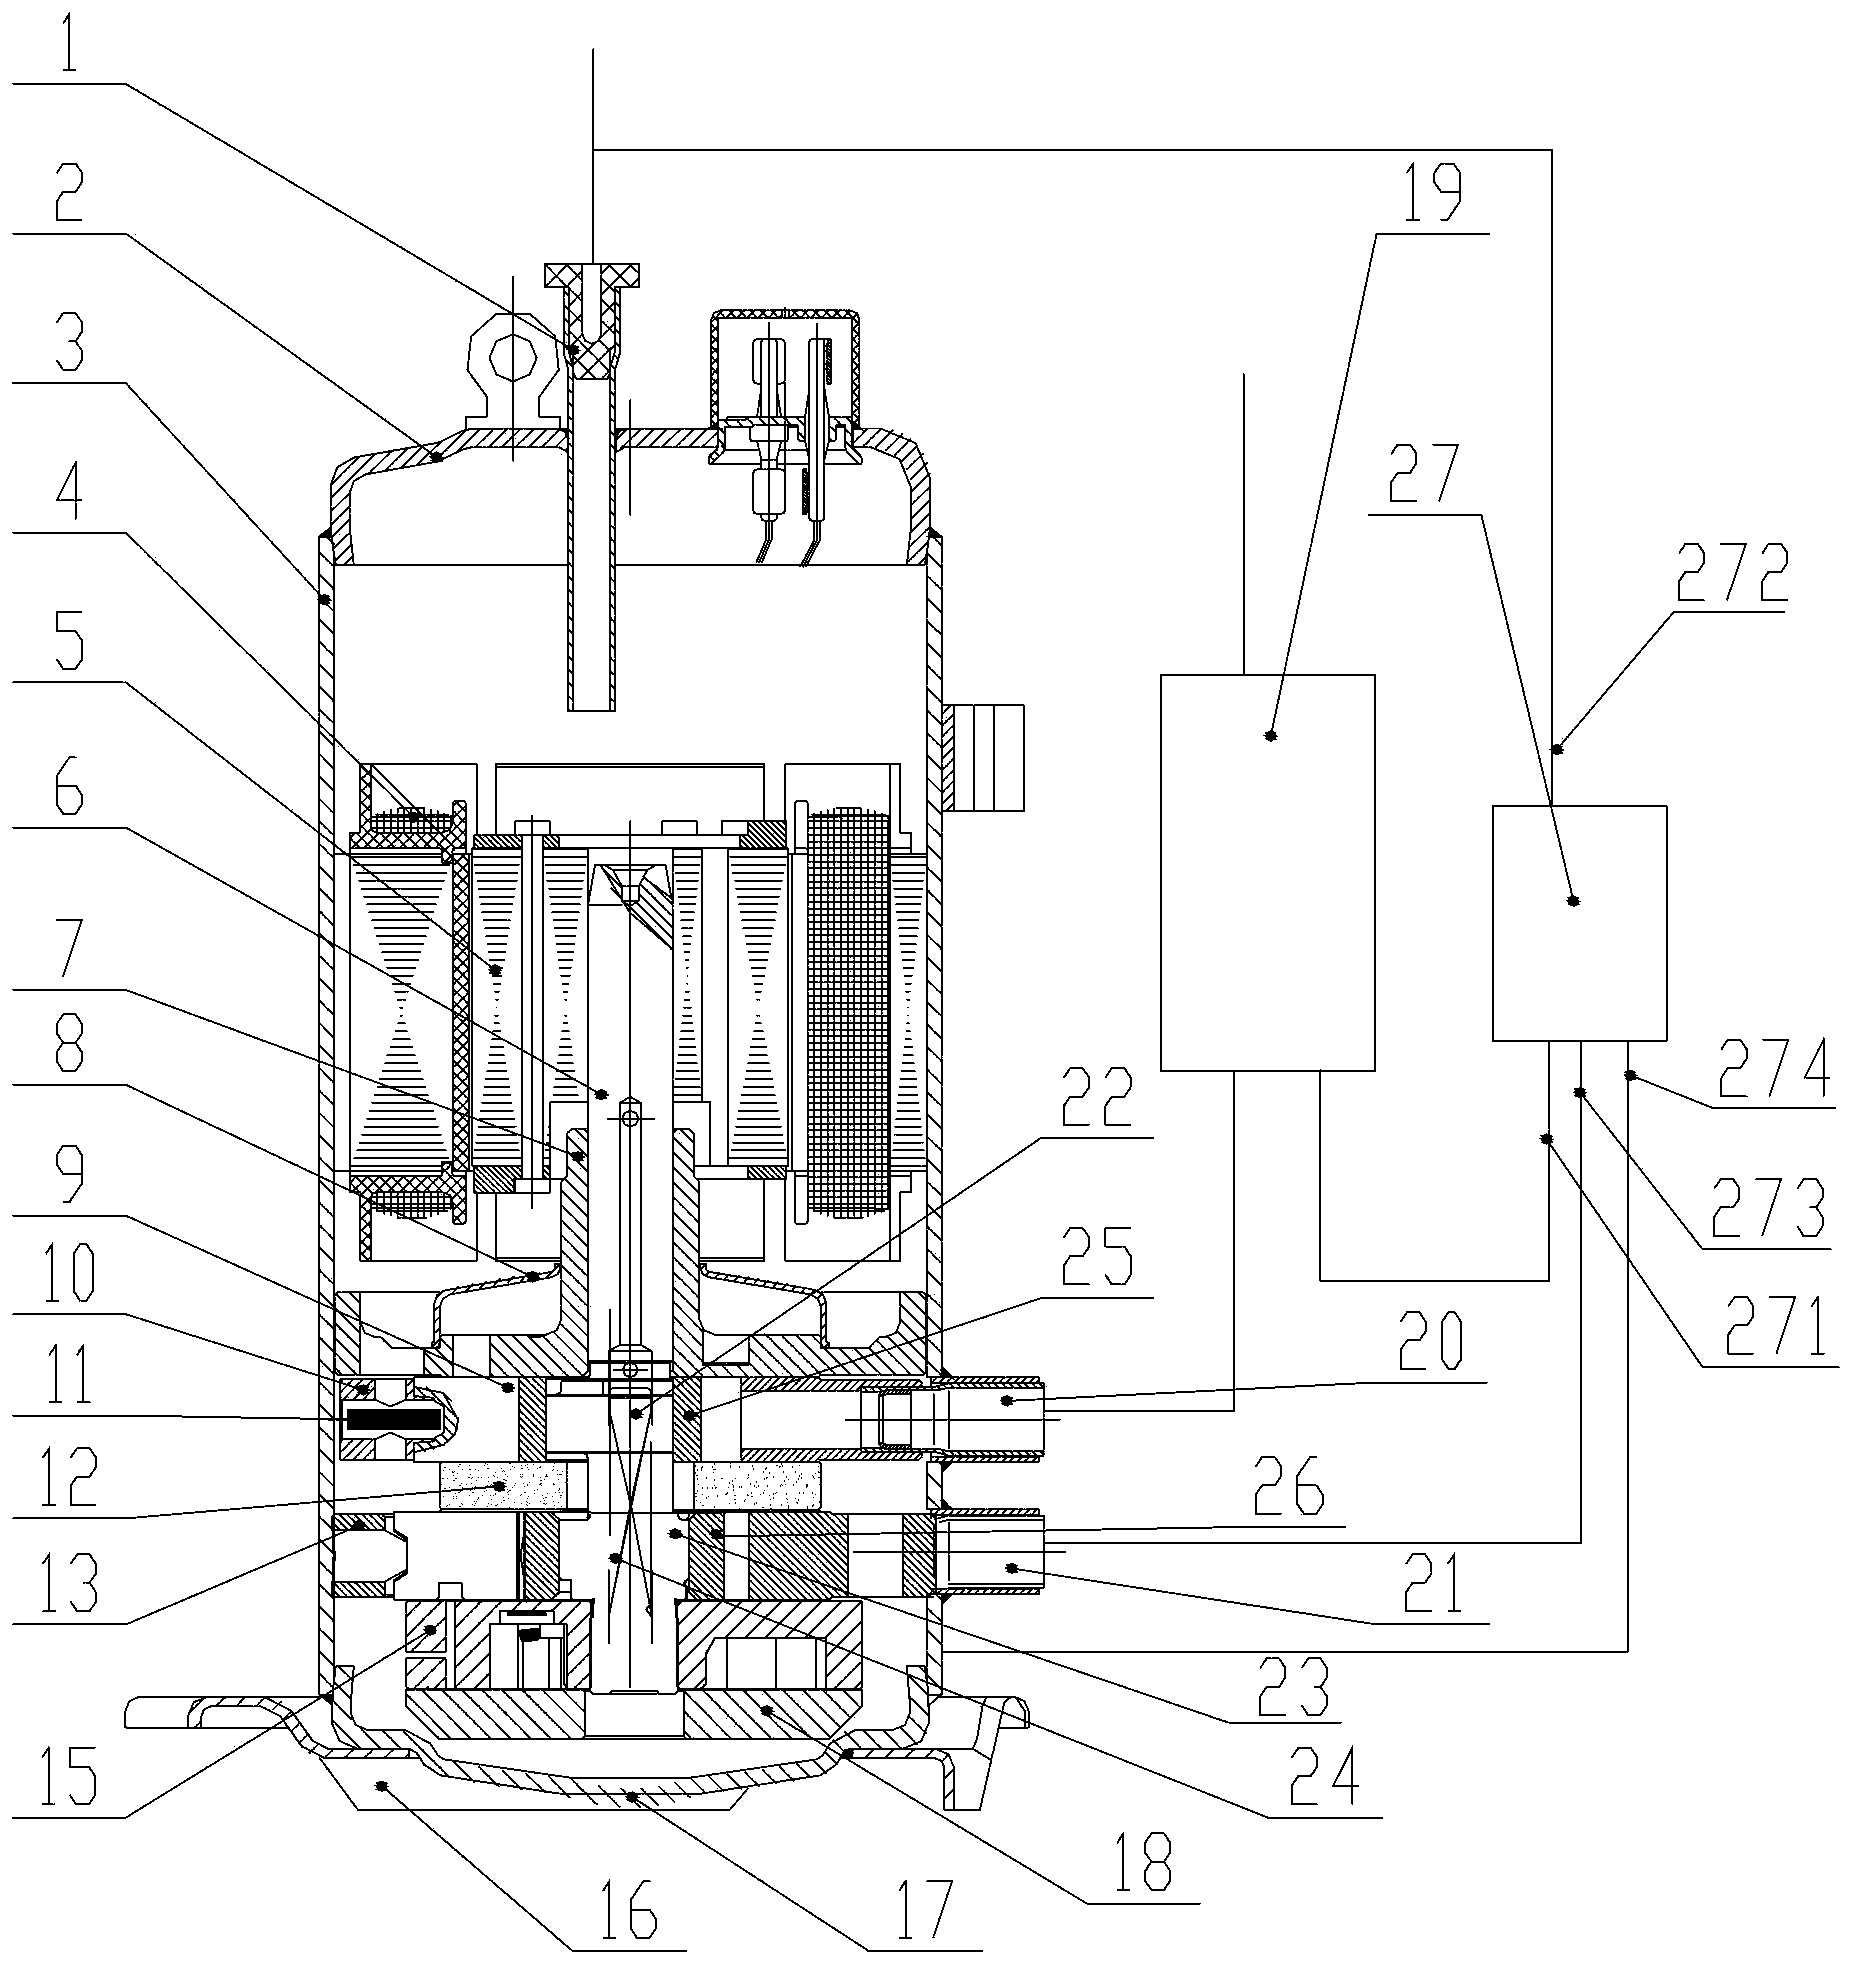 Volume variable rotation compressor